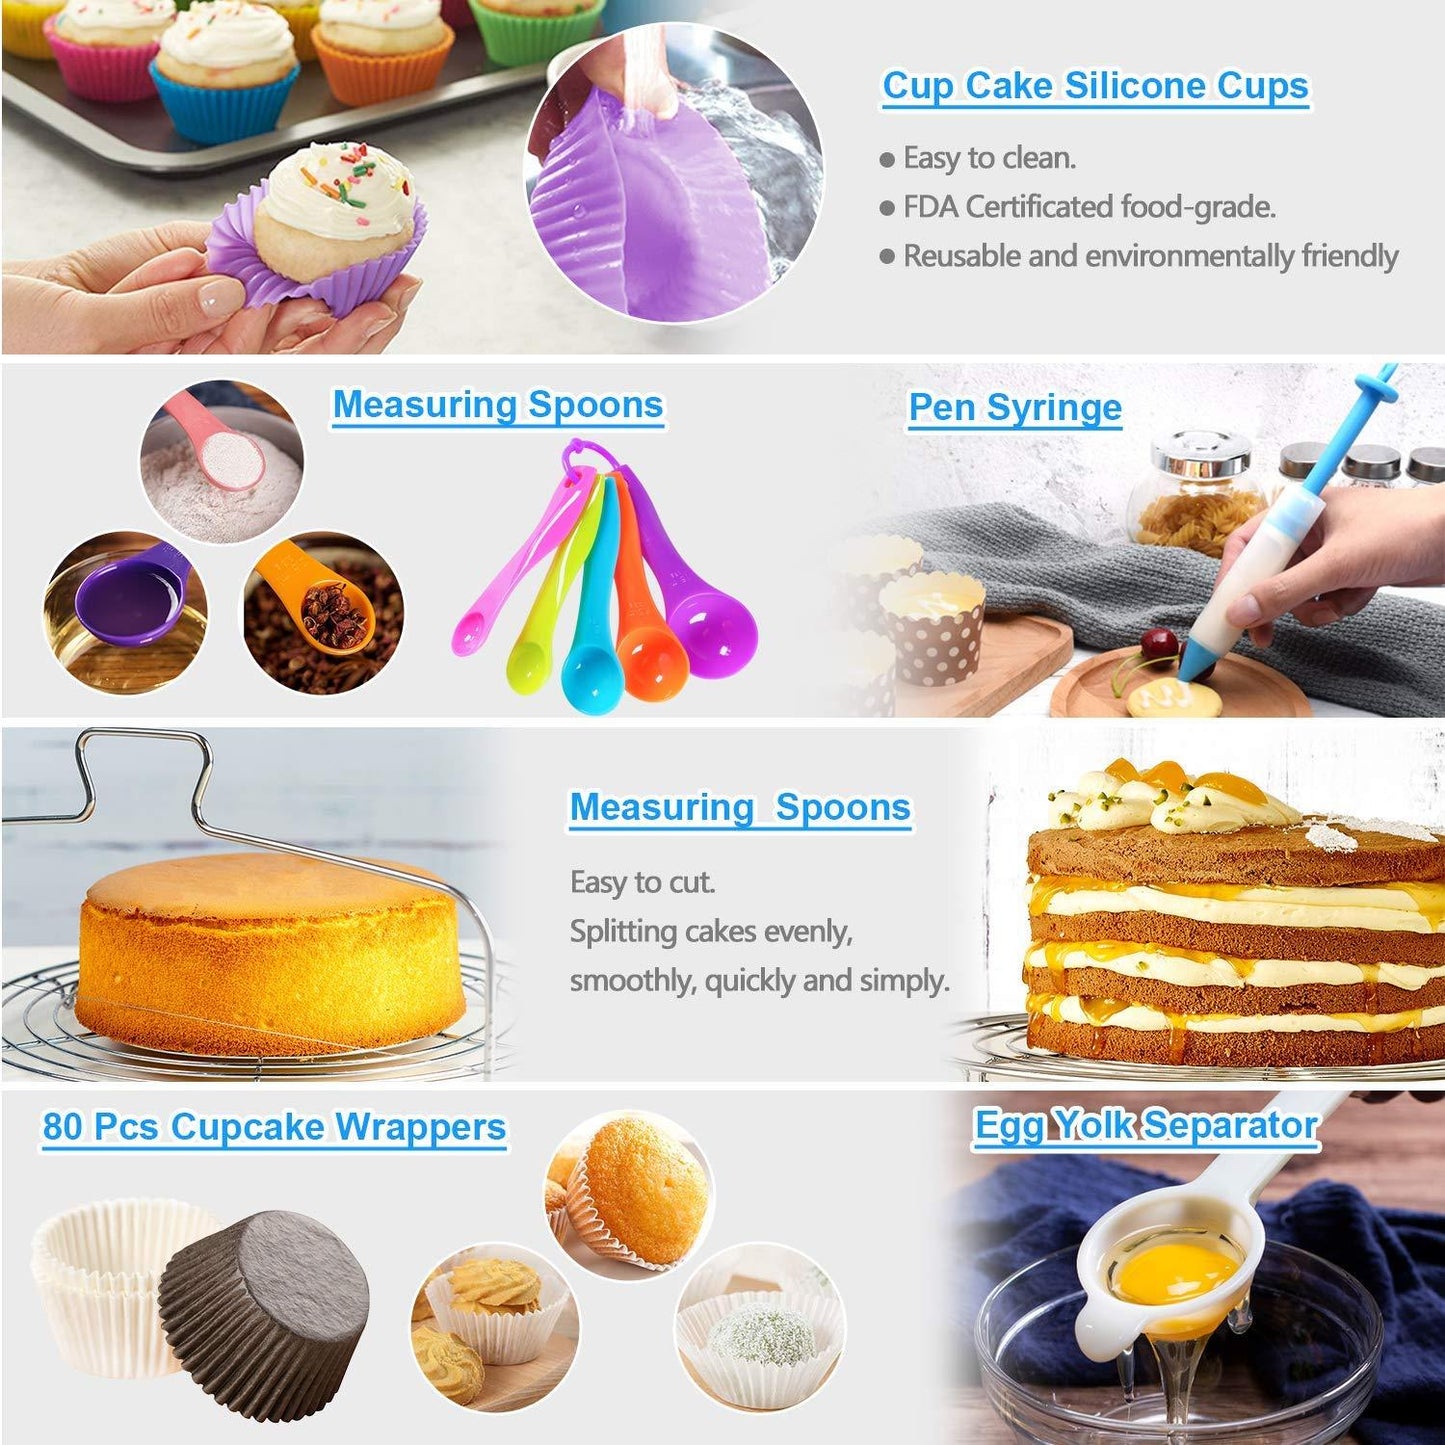 Cake Decorating Supplies,493 PCS Cake Decorating Kit 3 Packs Springform Cake Pans, Cake Rotating Turntable,48 Piping Icing Tips,7 Russian Nozzles, Baking Supplies,Cupcake Decorating Kit, Multicolor - CookCave